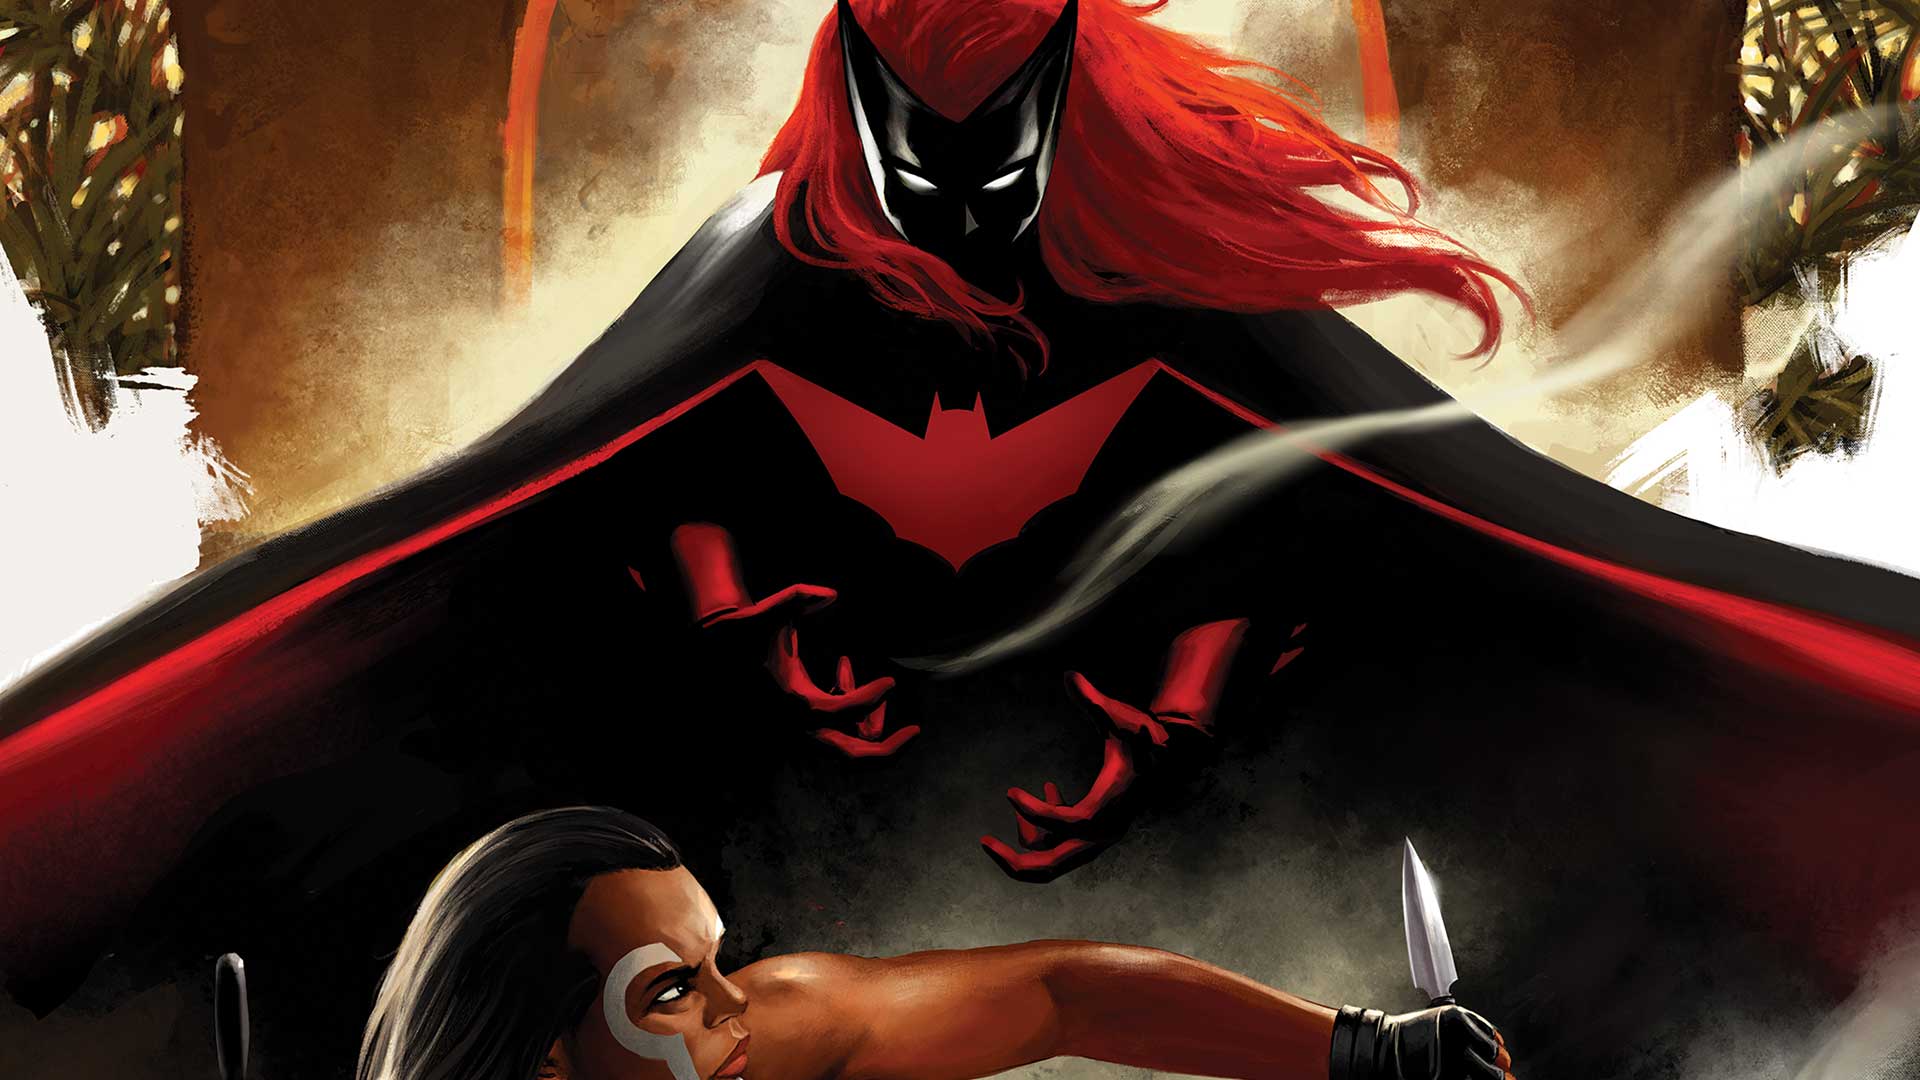 DC Comics Batwoman Series In Development At The CW